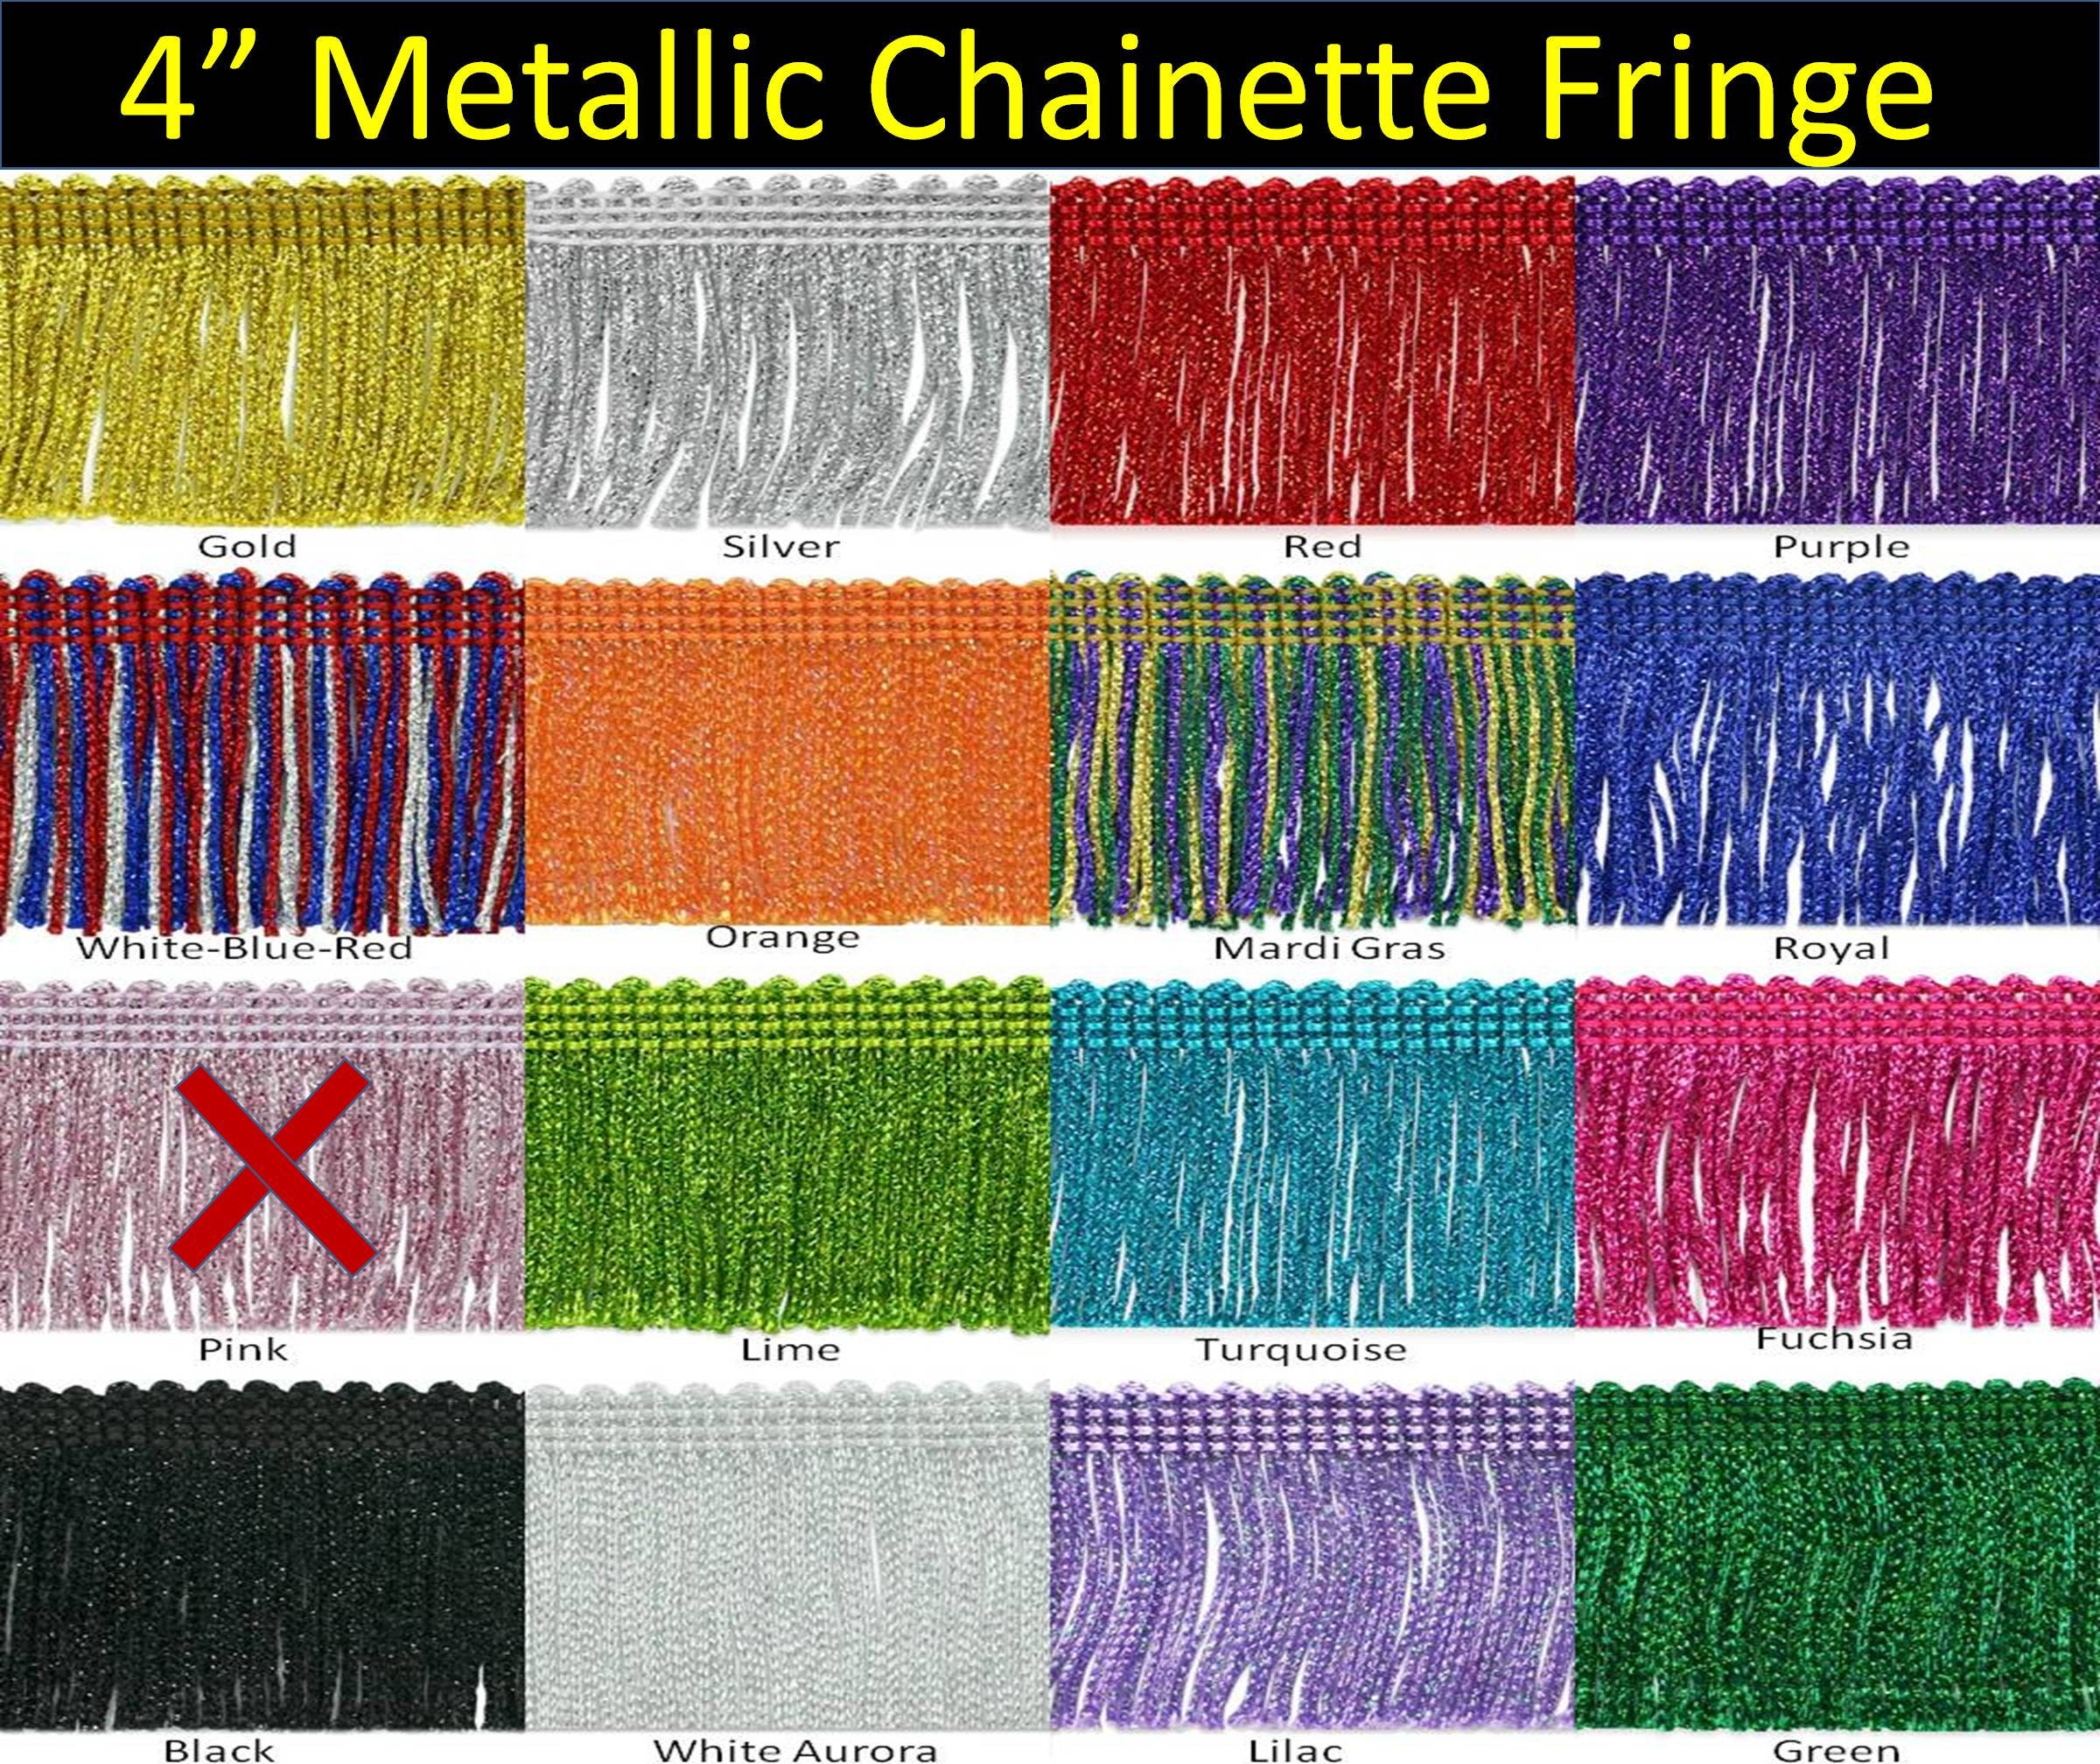 8 European Red Chainette Fringe Trim